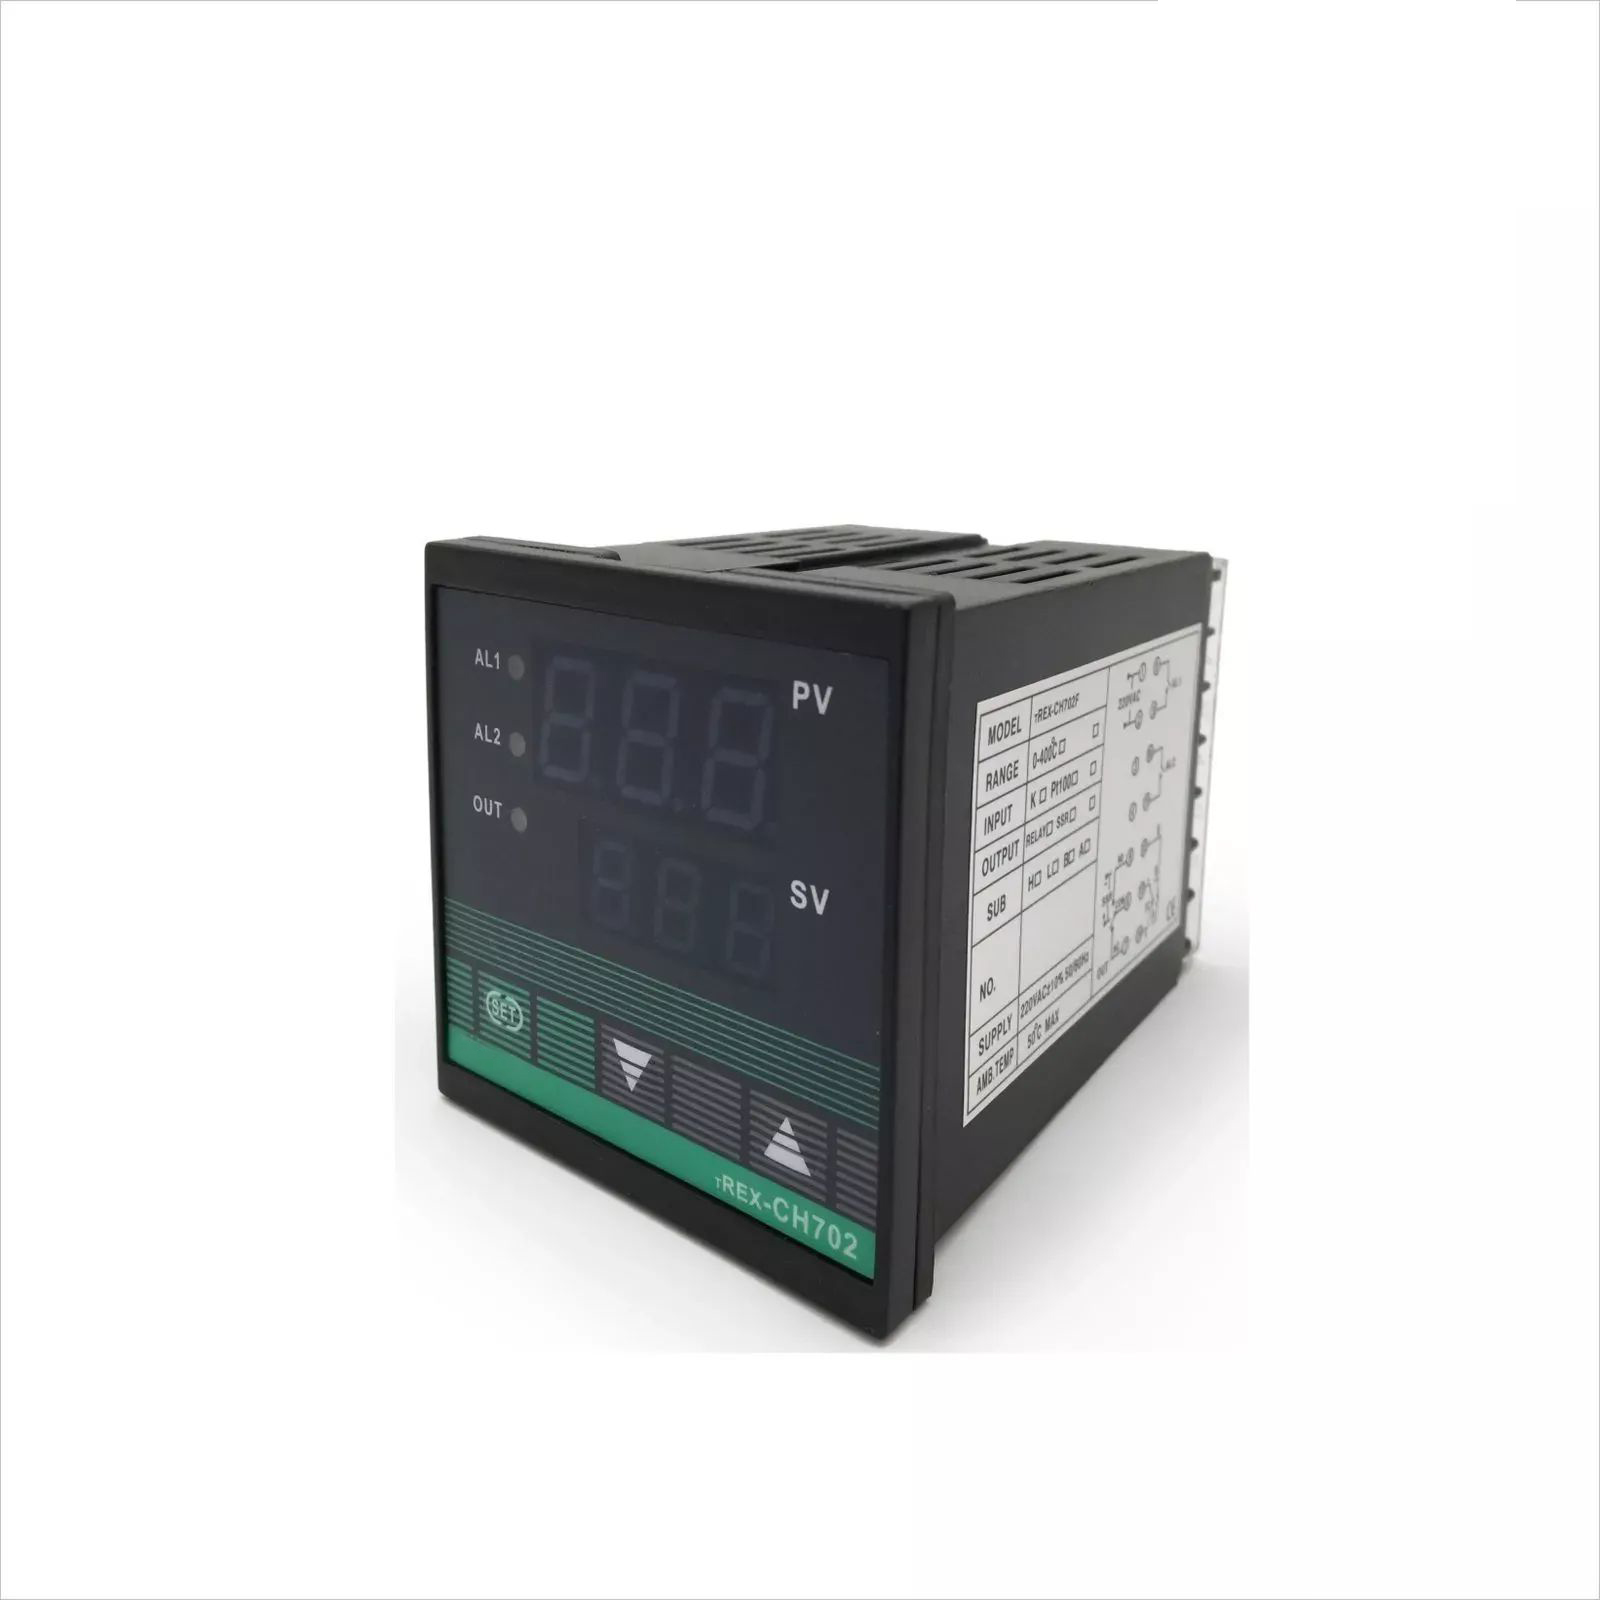 CH702 3 digit digital aiset pid ssr temperature controller for Bag cutting machine